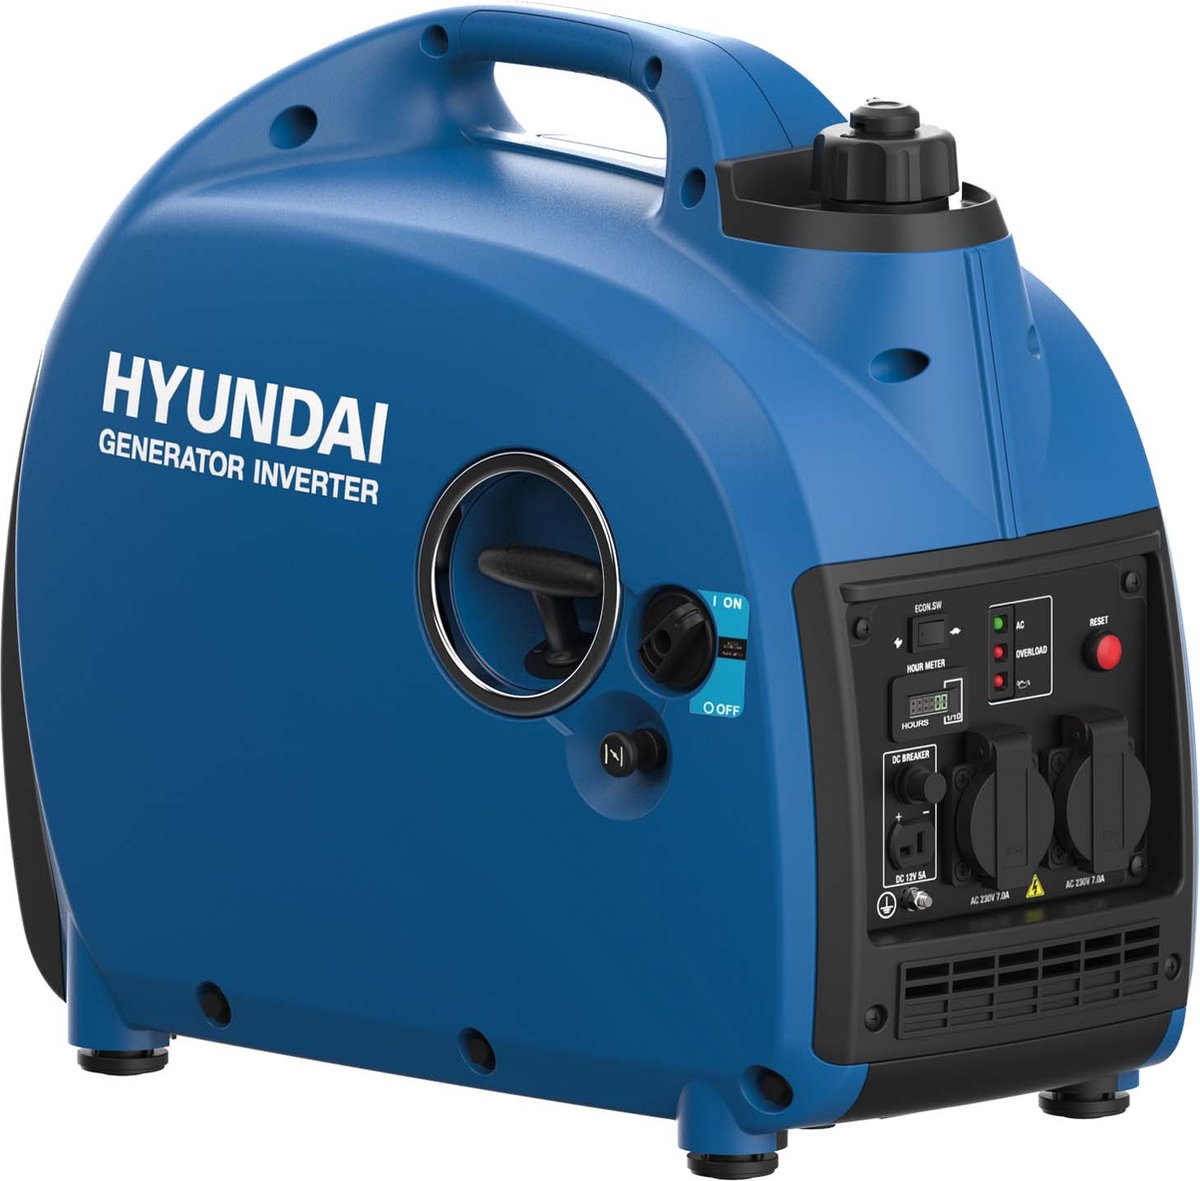 HYUNDAI inverter generator 2000 W - Benzinemotor - Schoon, fluisterstil en betrouwbaar - LED-scherm - Hyundai